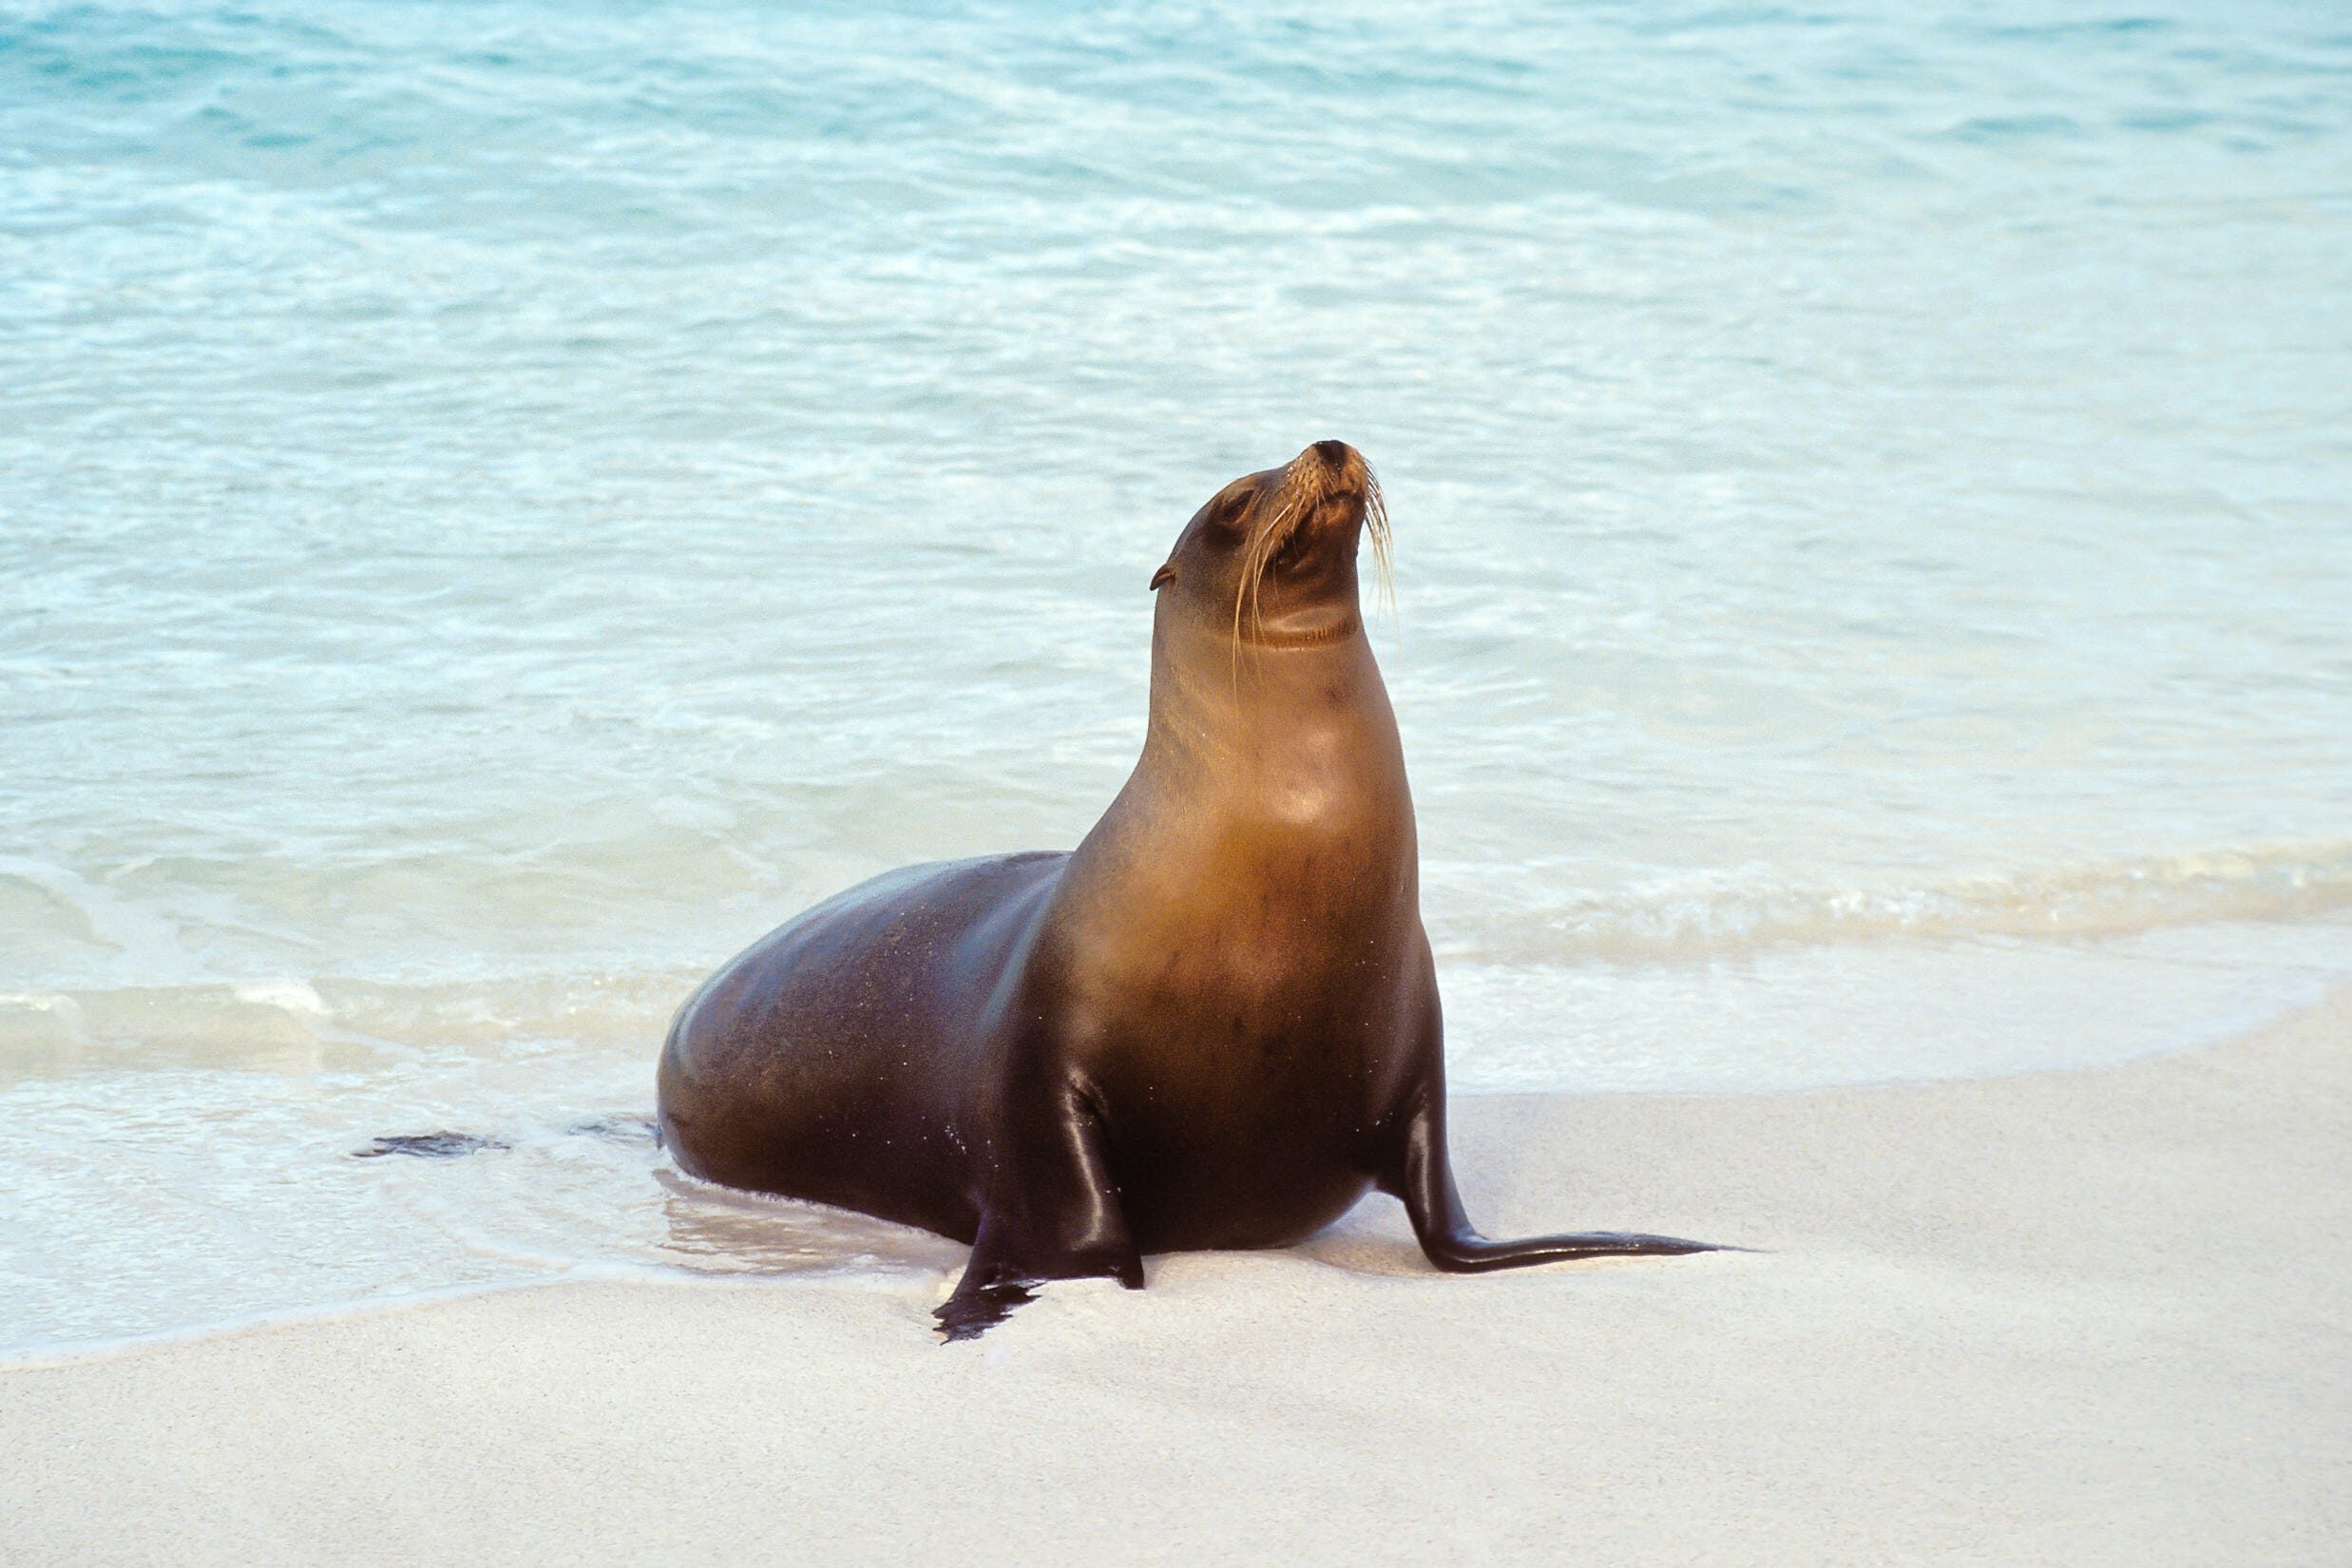 Beachgoers Warned About 'Aggressive' Algae-Poisoned Sea Lions